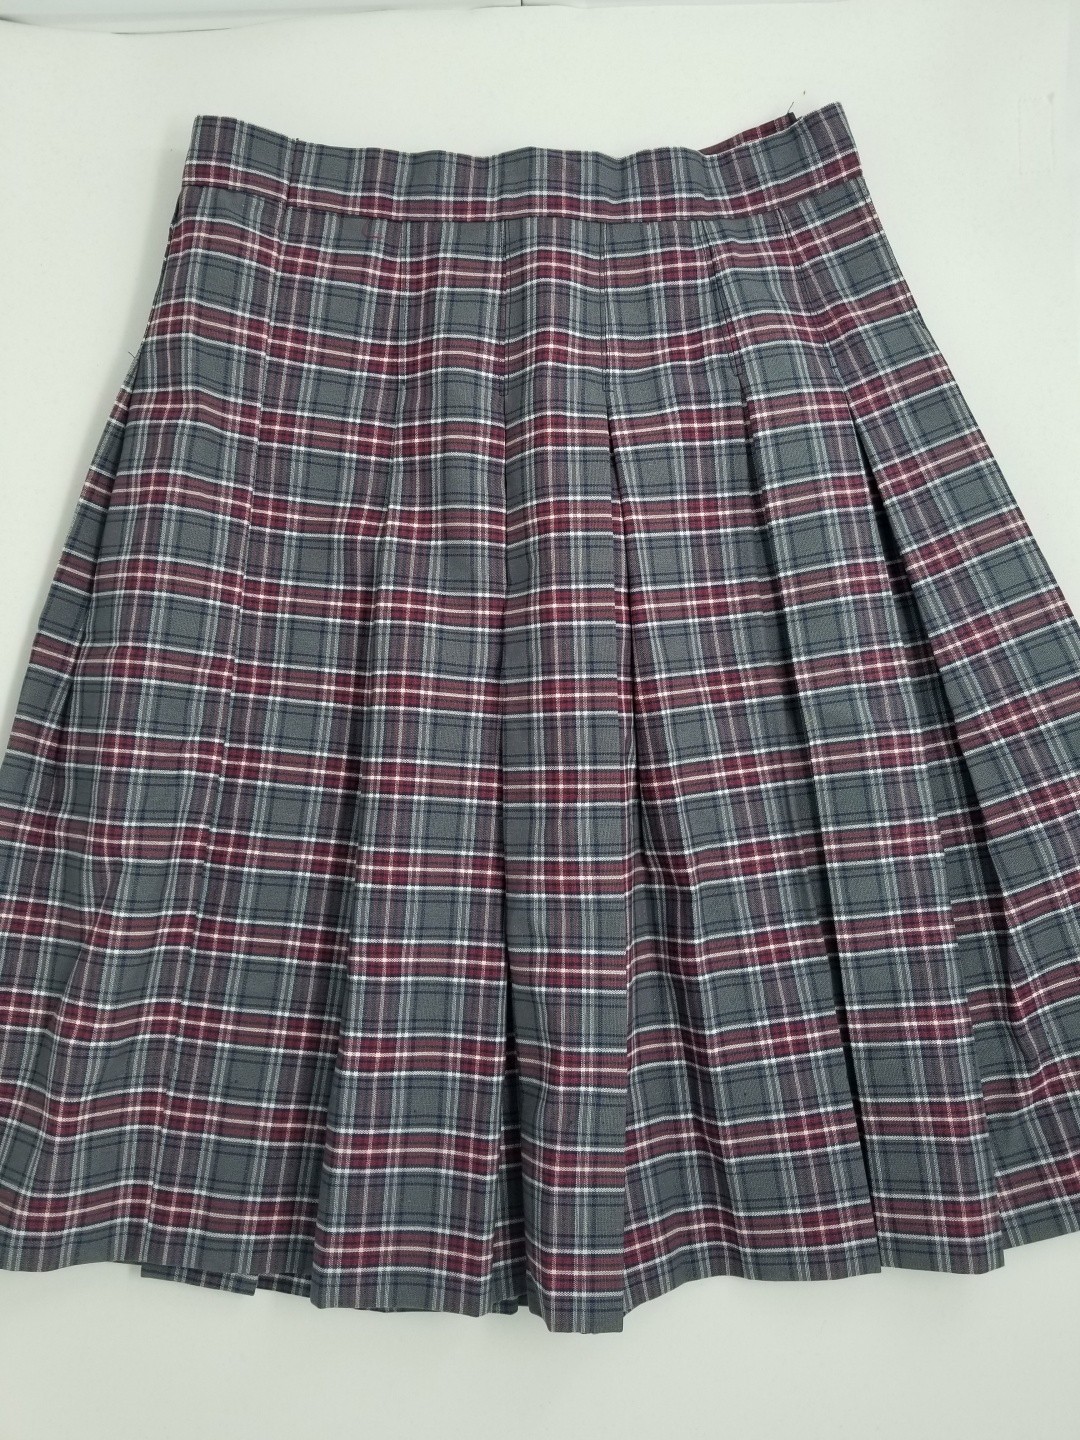 Stitch Down Pleat Skirt- Style 11-Plaid 84